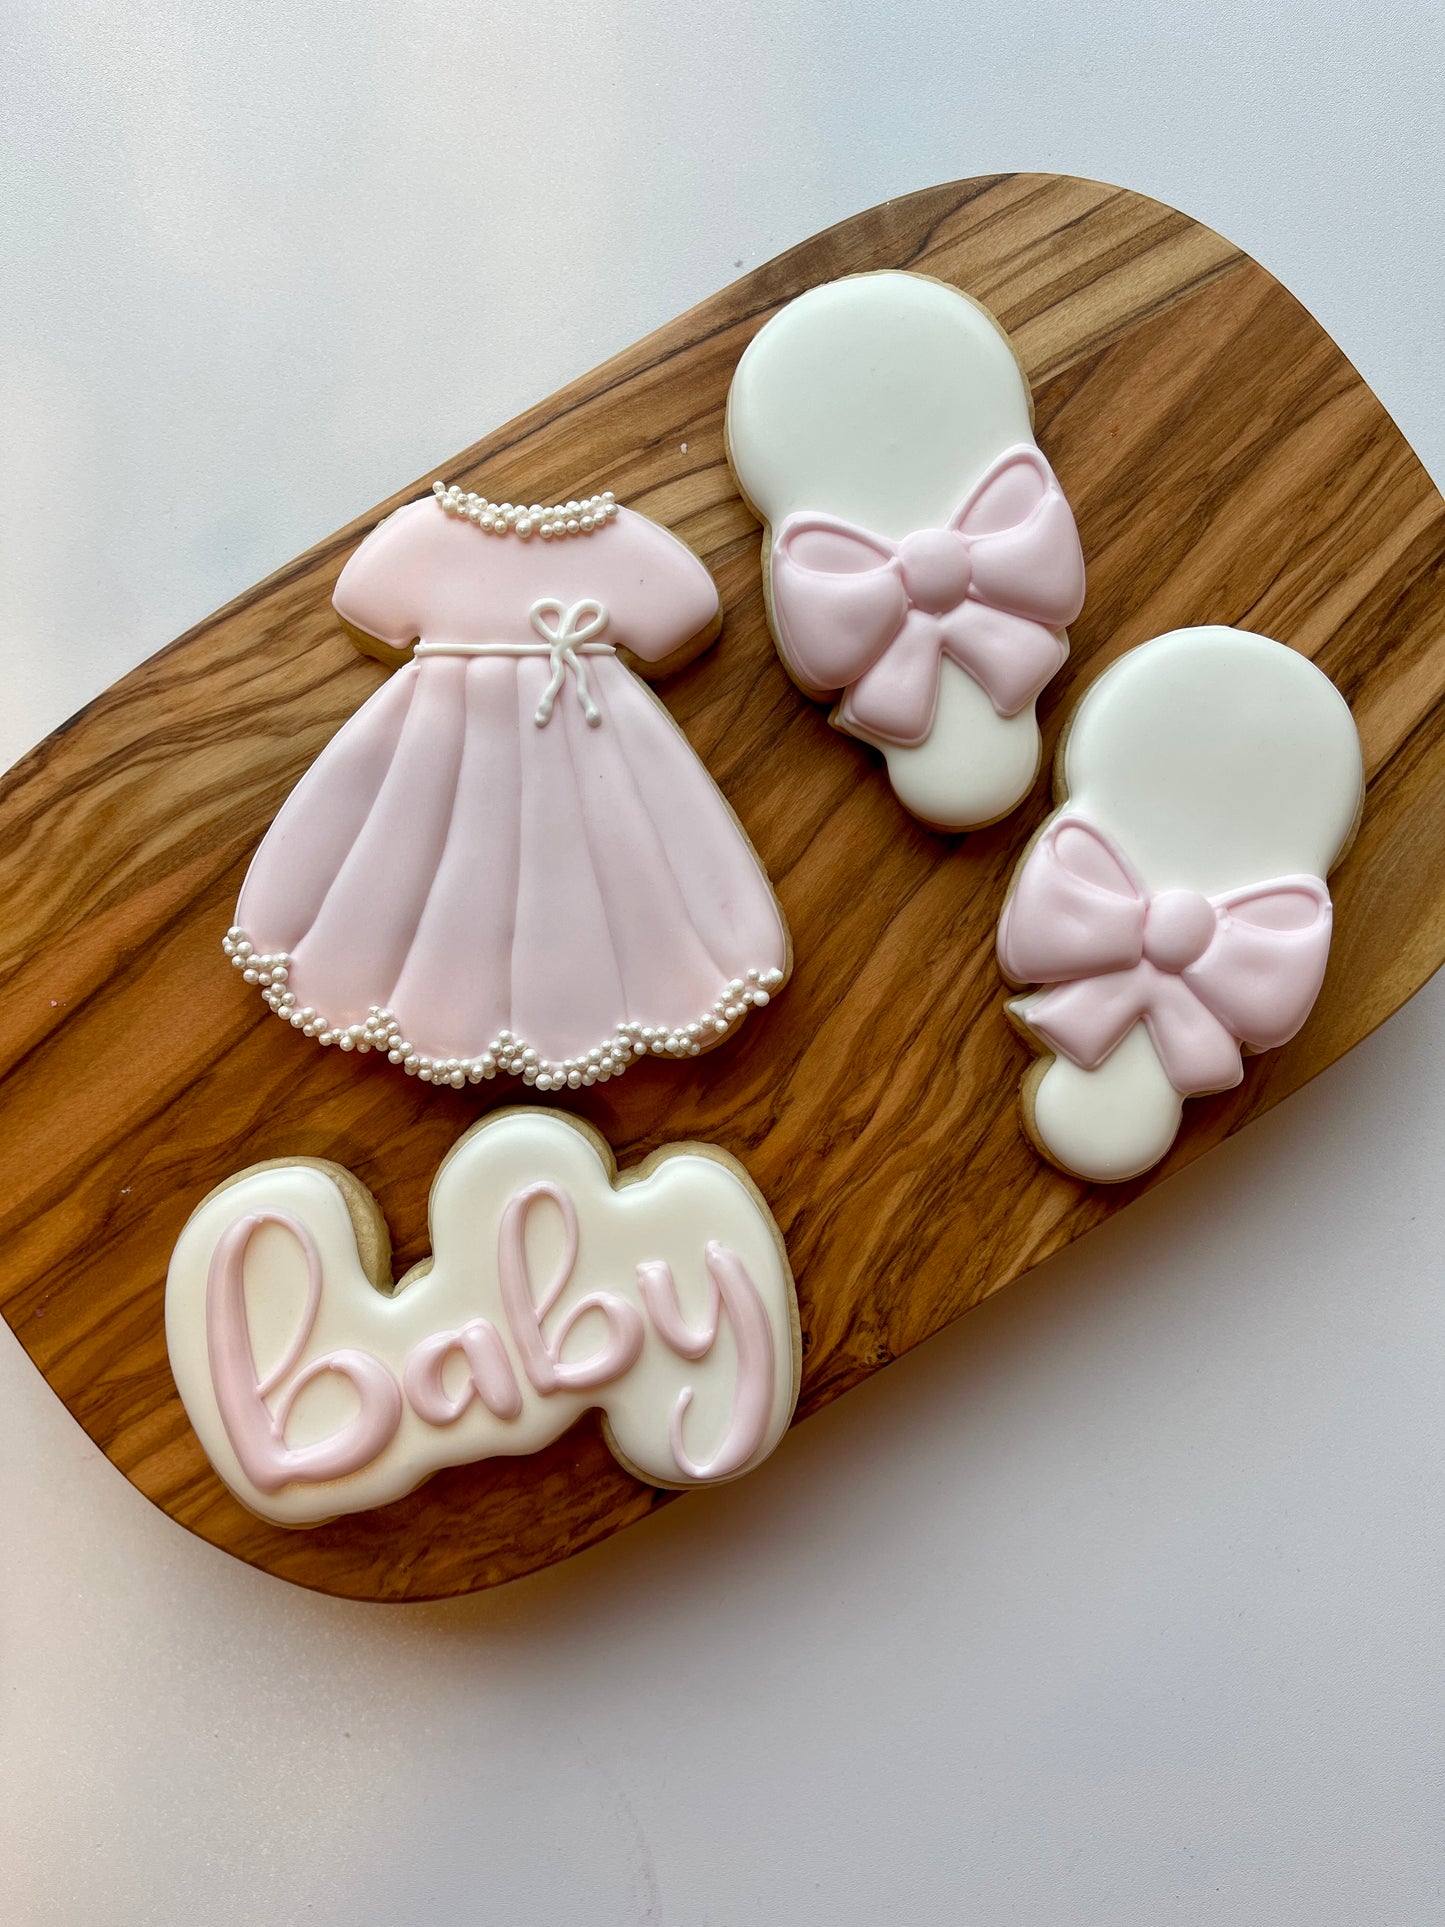 Baby dress cookie cutter